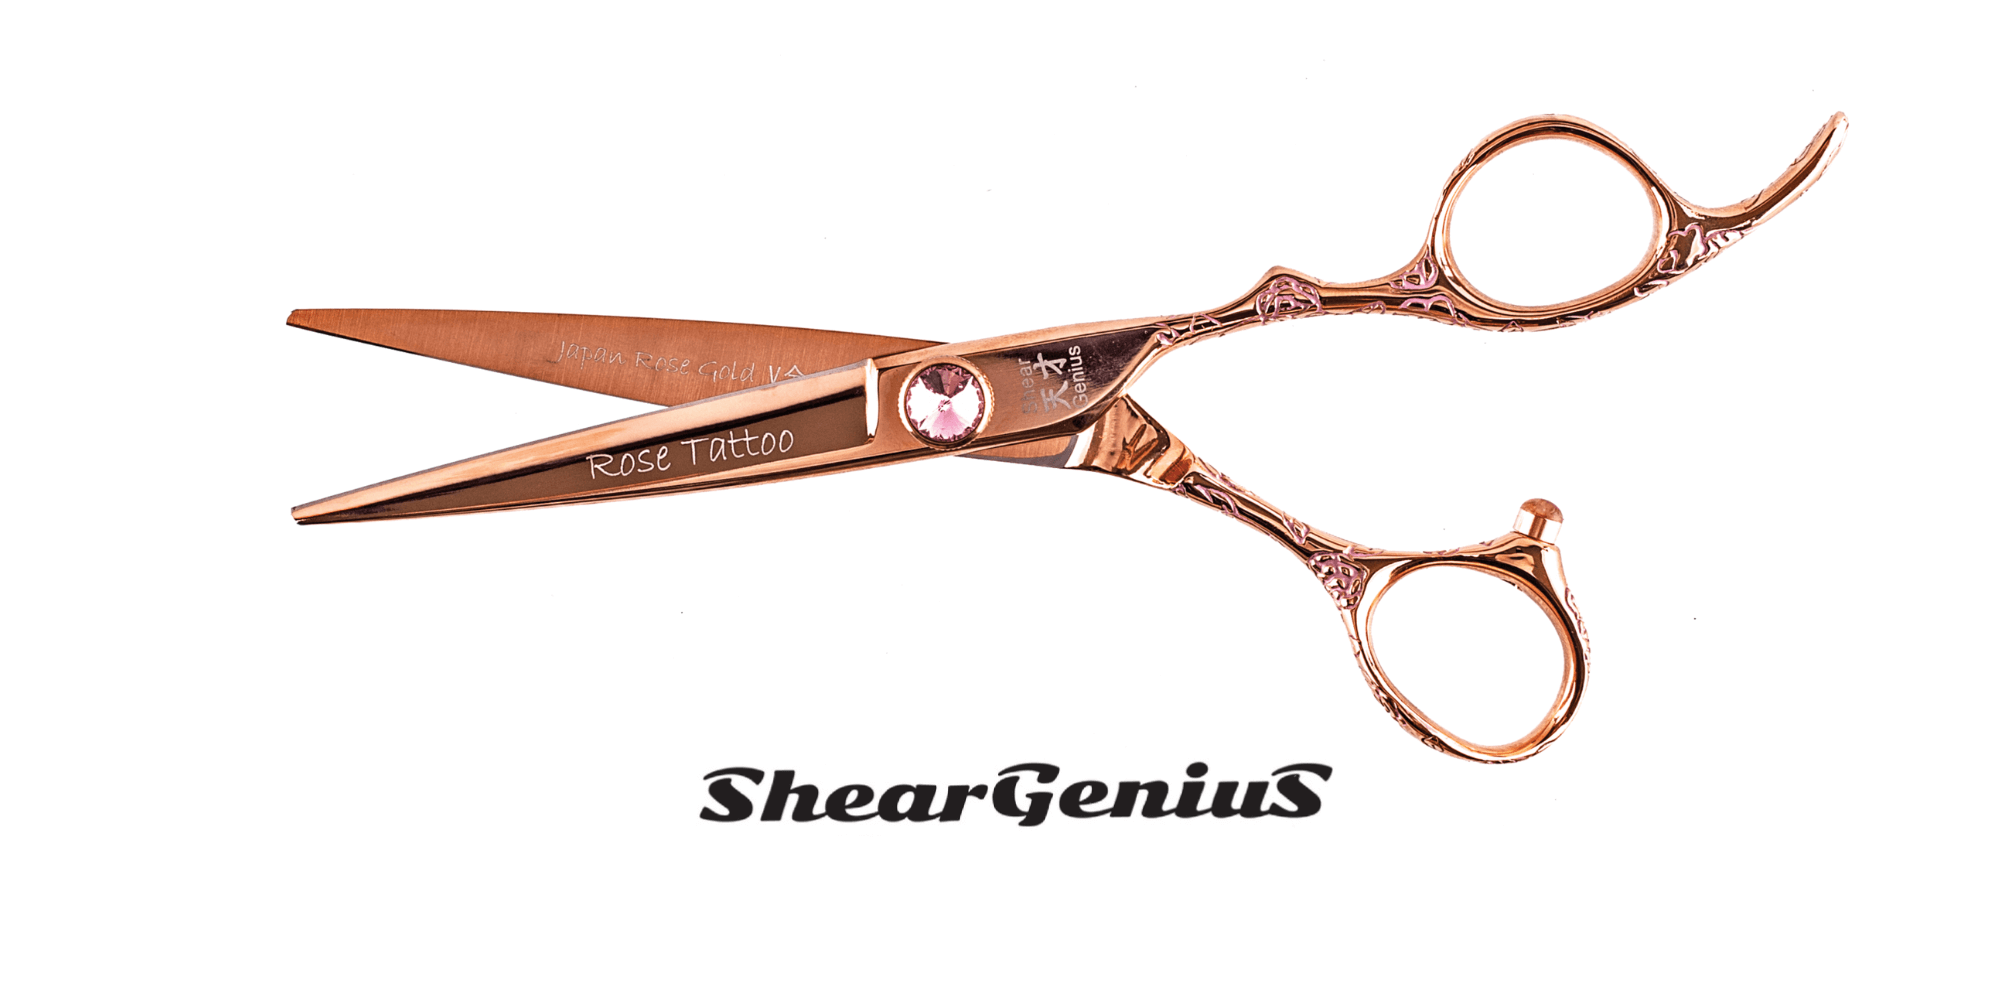 ShearGenius Hairdressing scissor 5.5 / Pink Rose Tattoo Professional Hairdressing Scissors